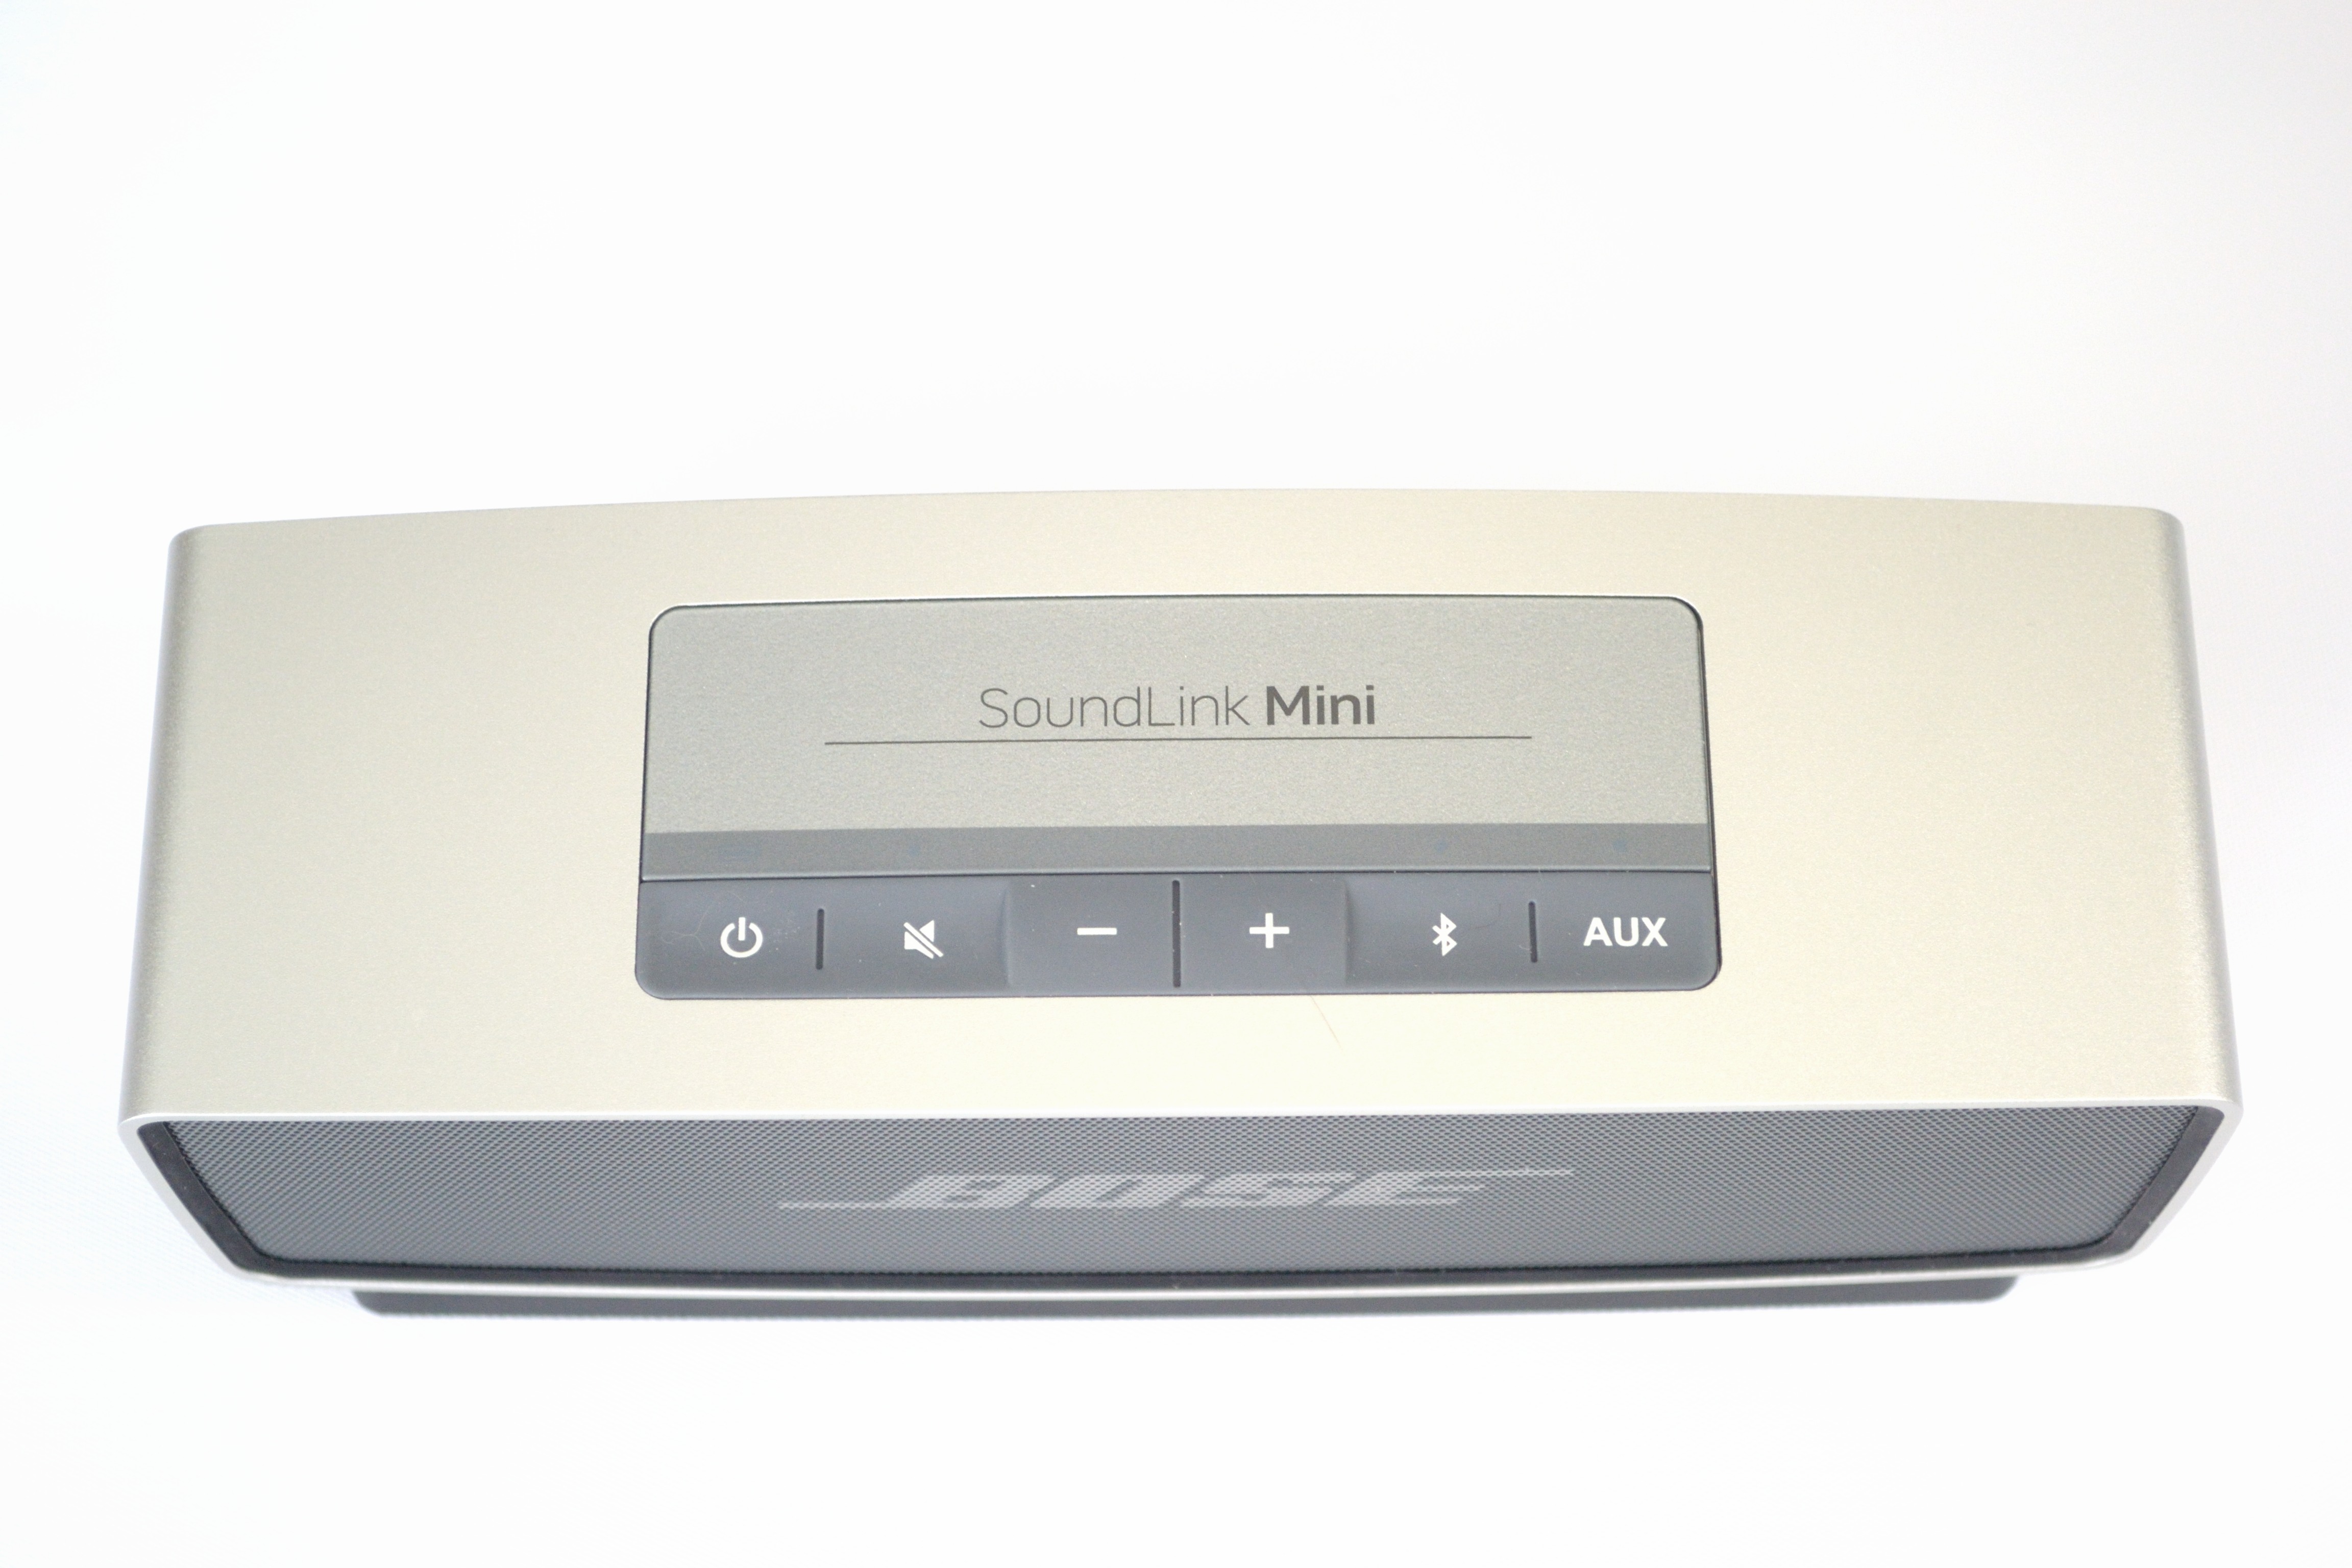 Bose SoundLink Mini vs Bose SoundLink Mini II detailed comparison as of